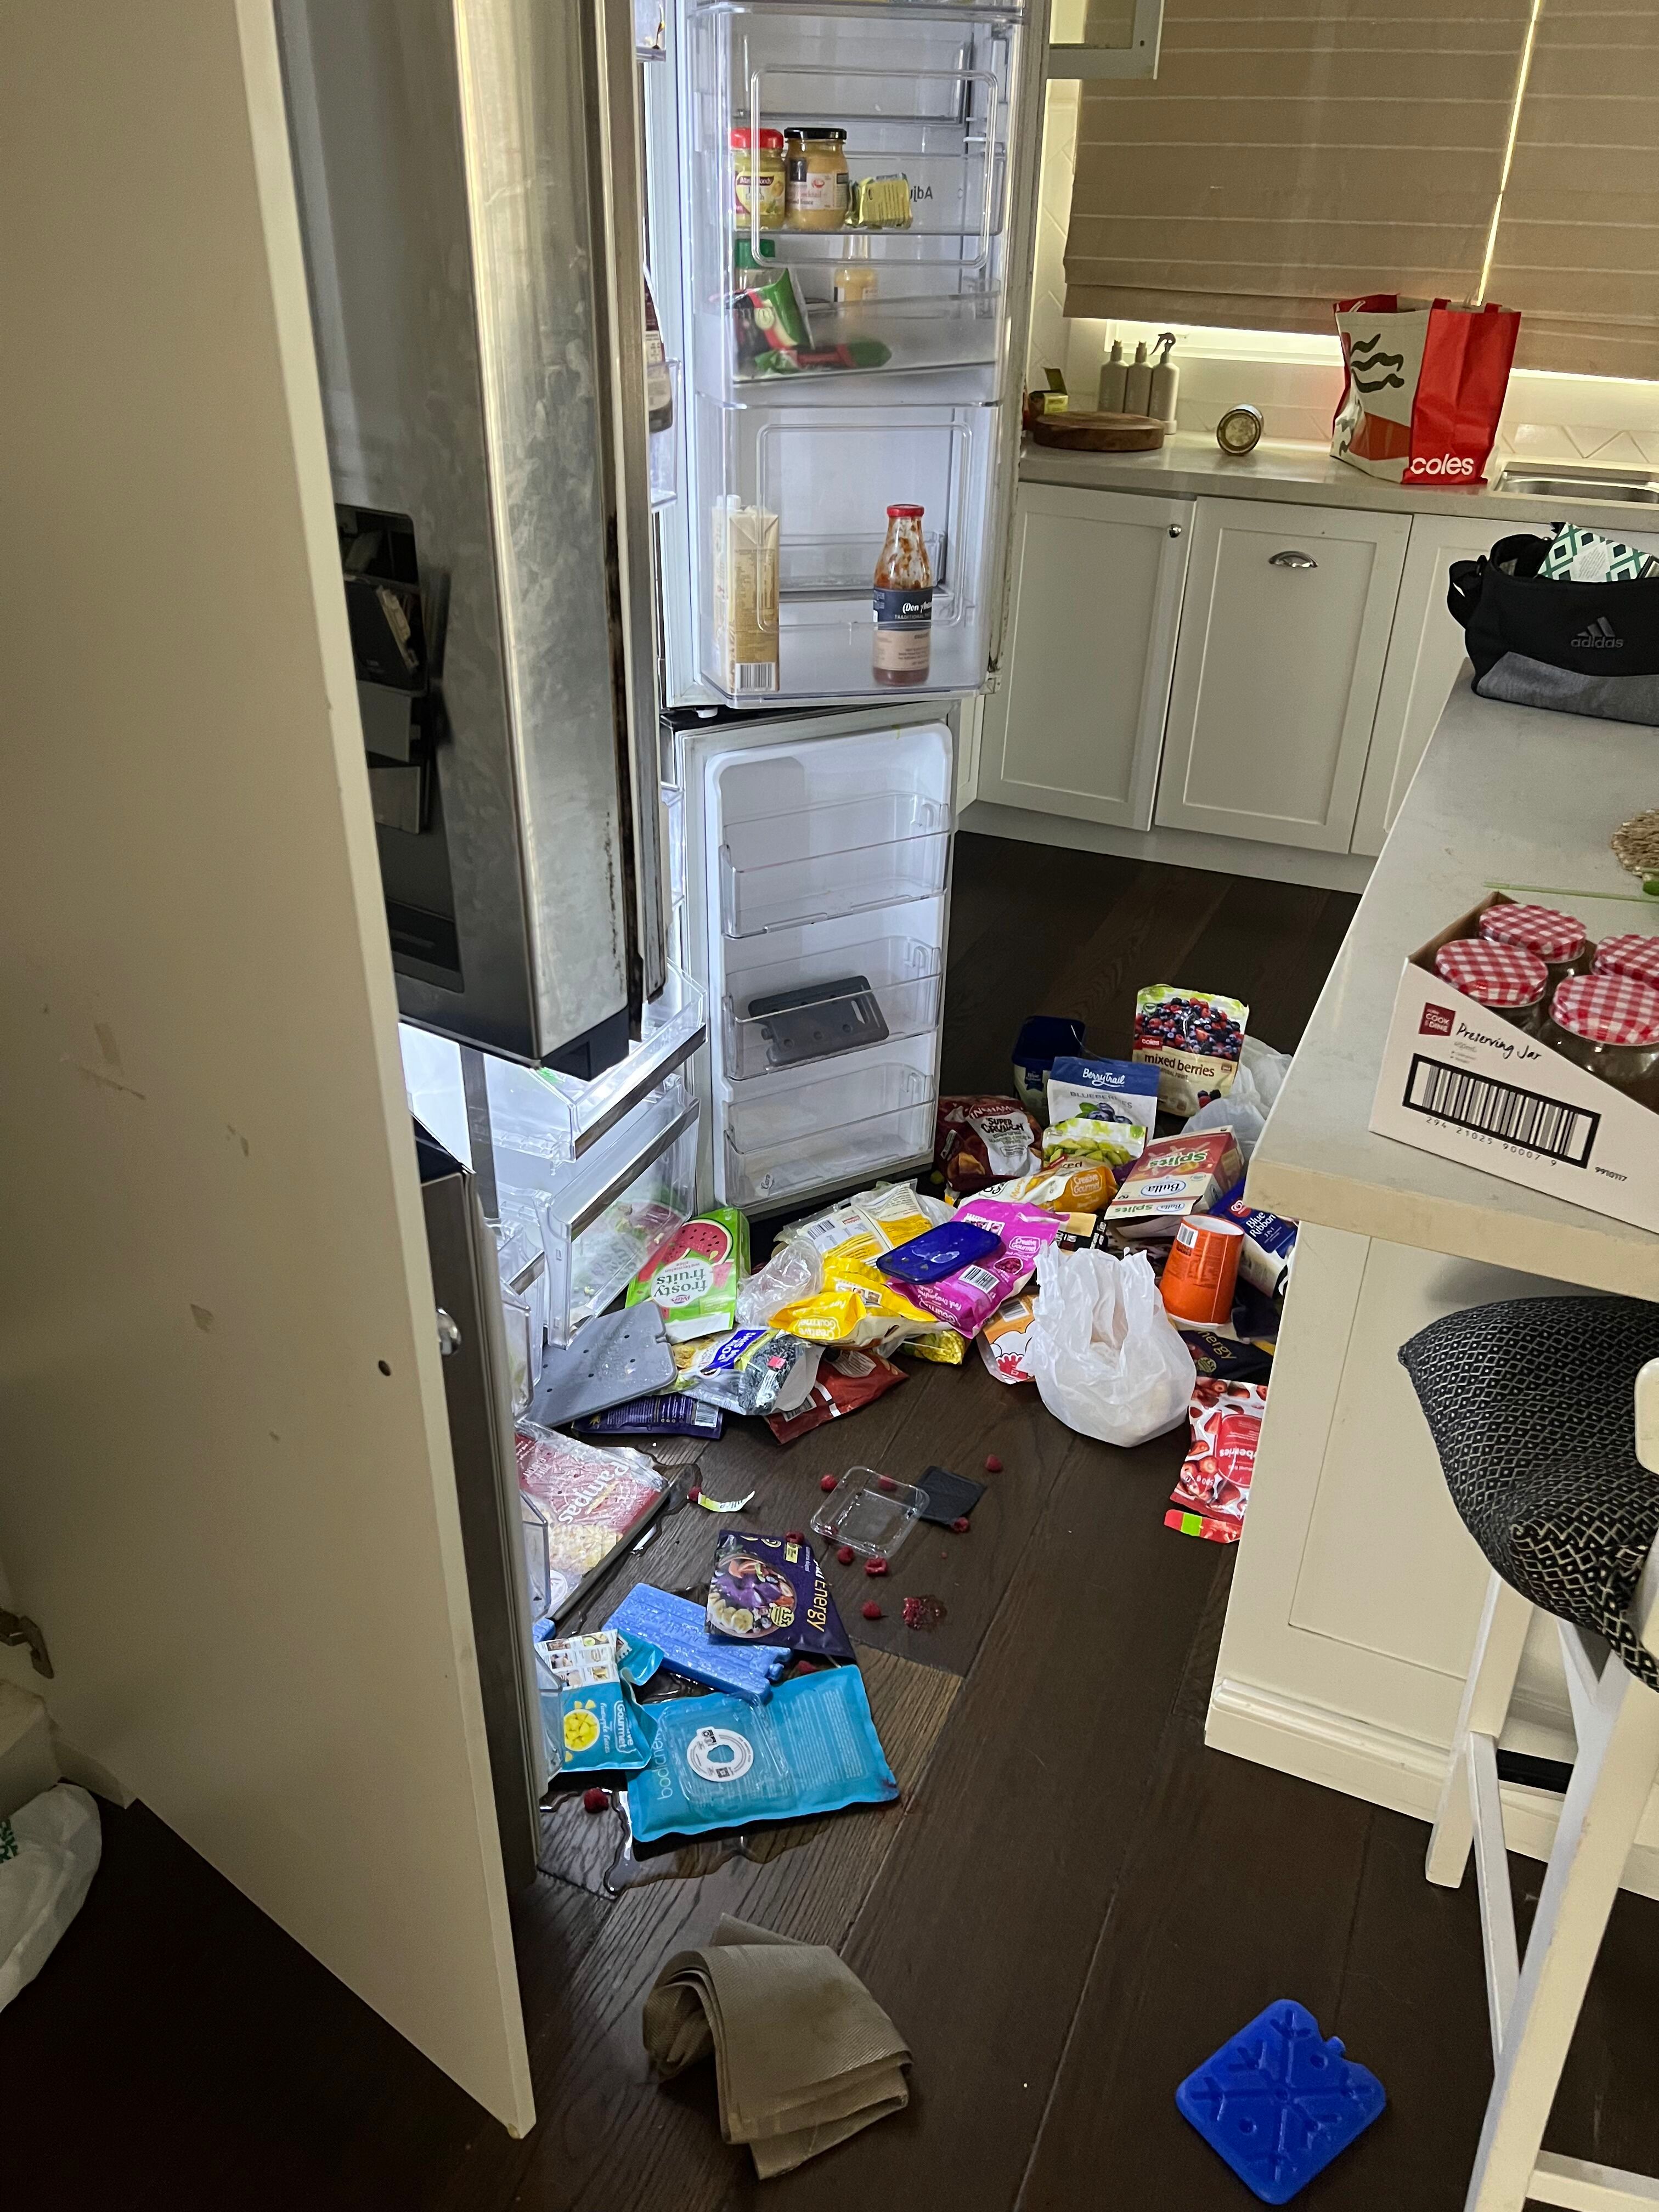 An open fridge and food strewn across a kitchen floor.